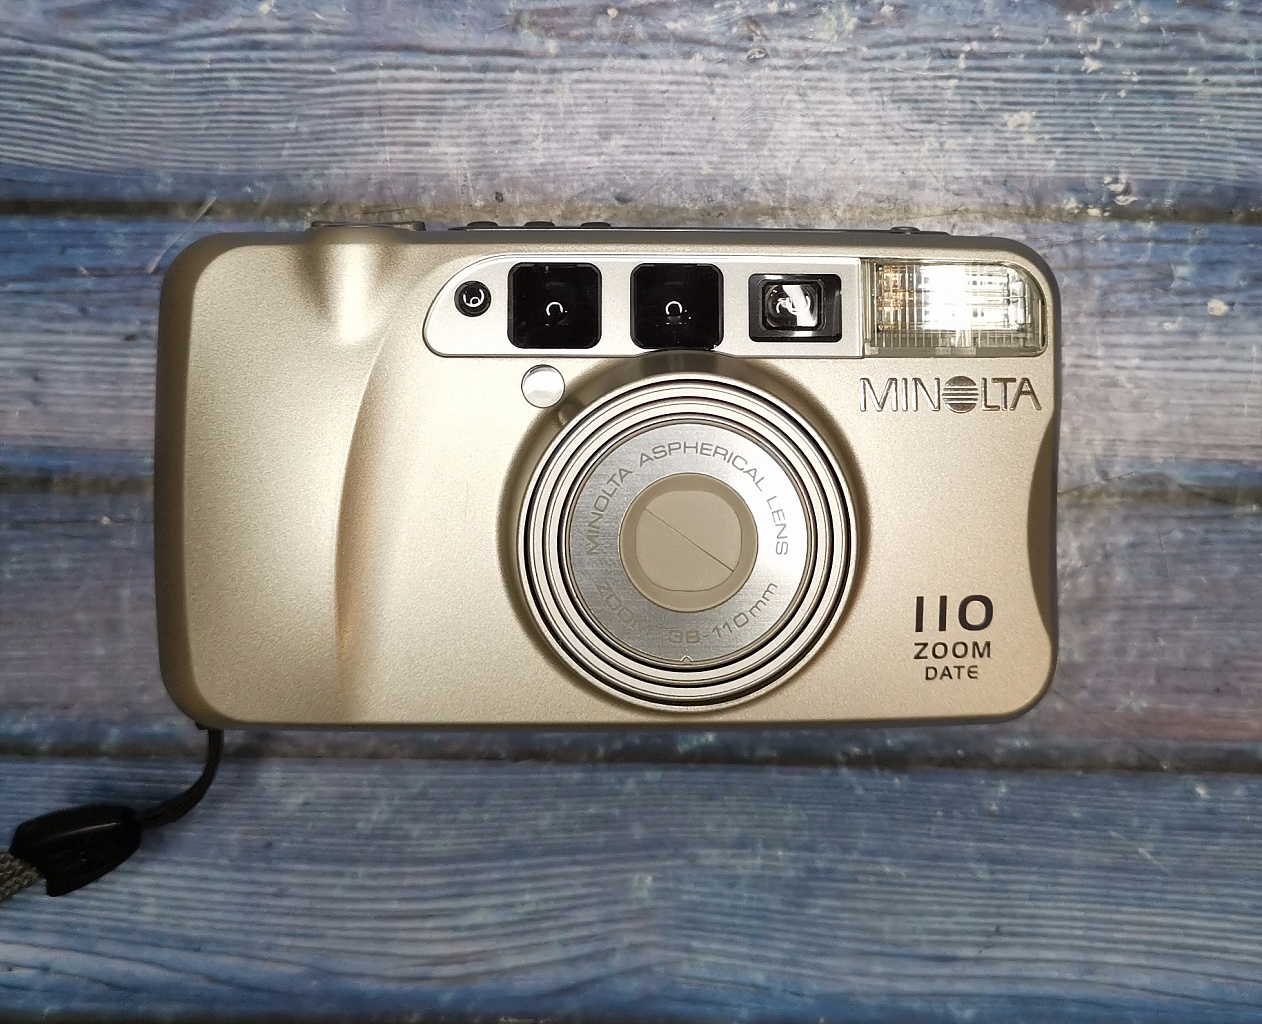 MINOLTA 110 ZOOM DATE - デジタルカメラ